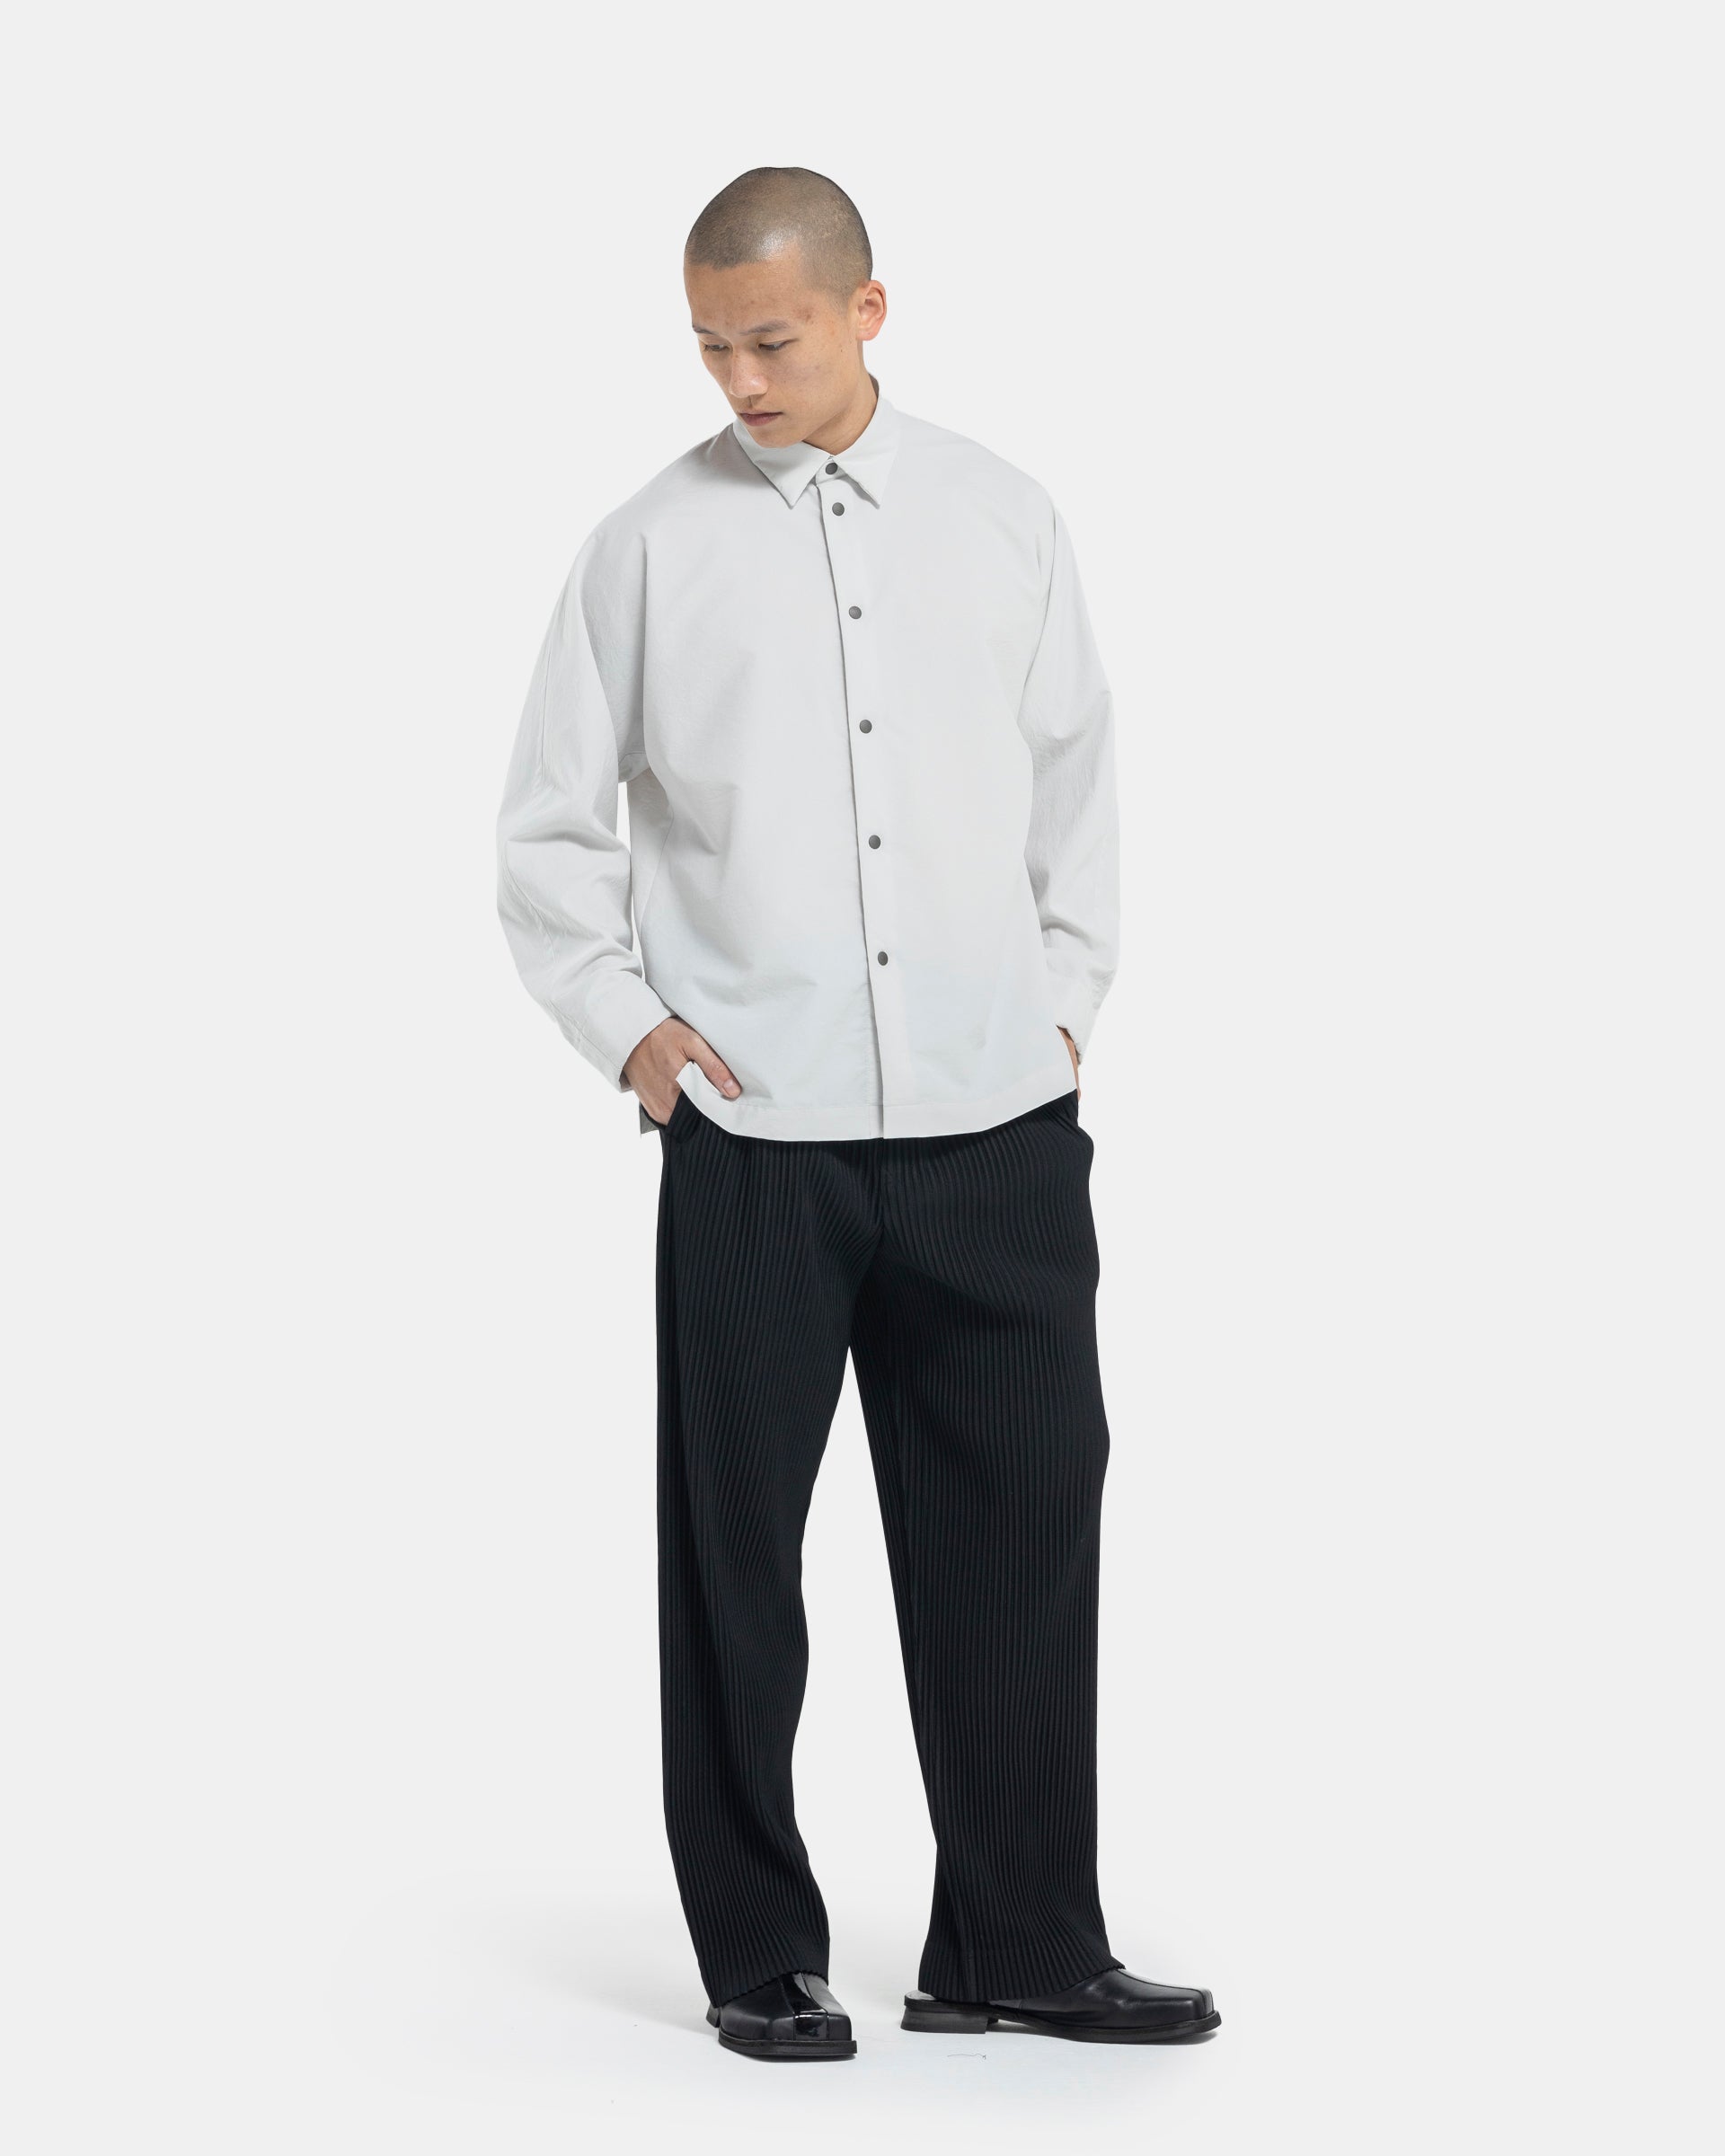 Male model wearing black Homme Plissé Issey Miyake pants on white background